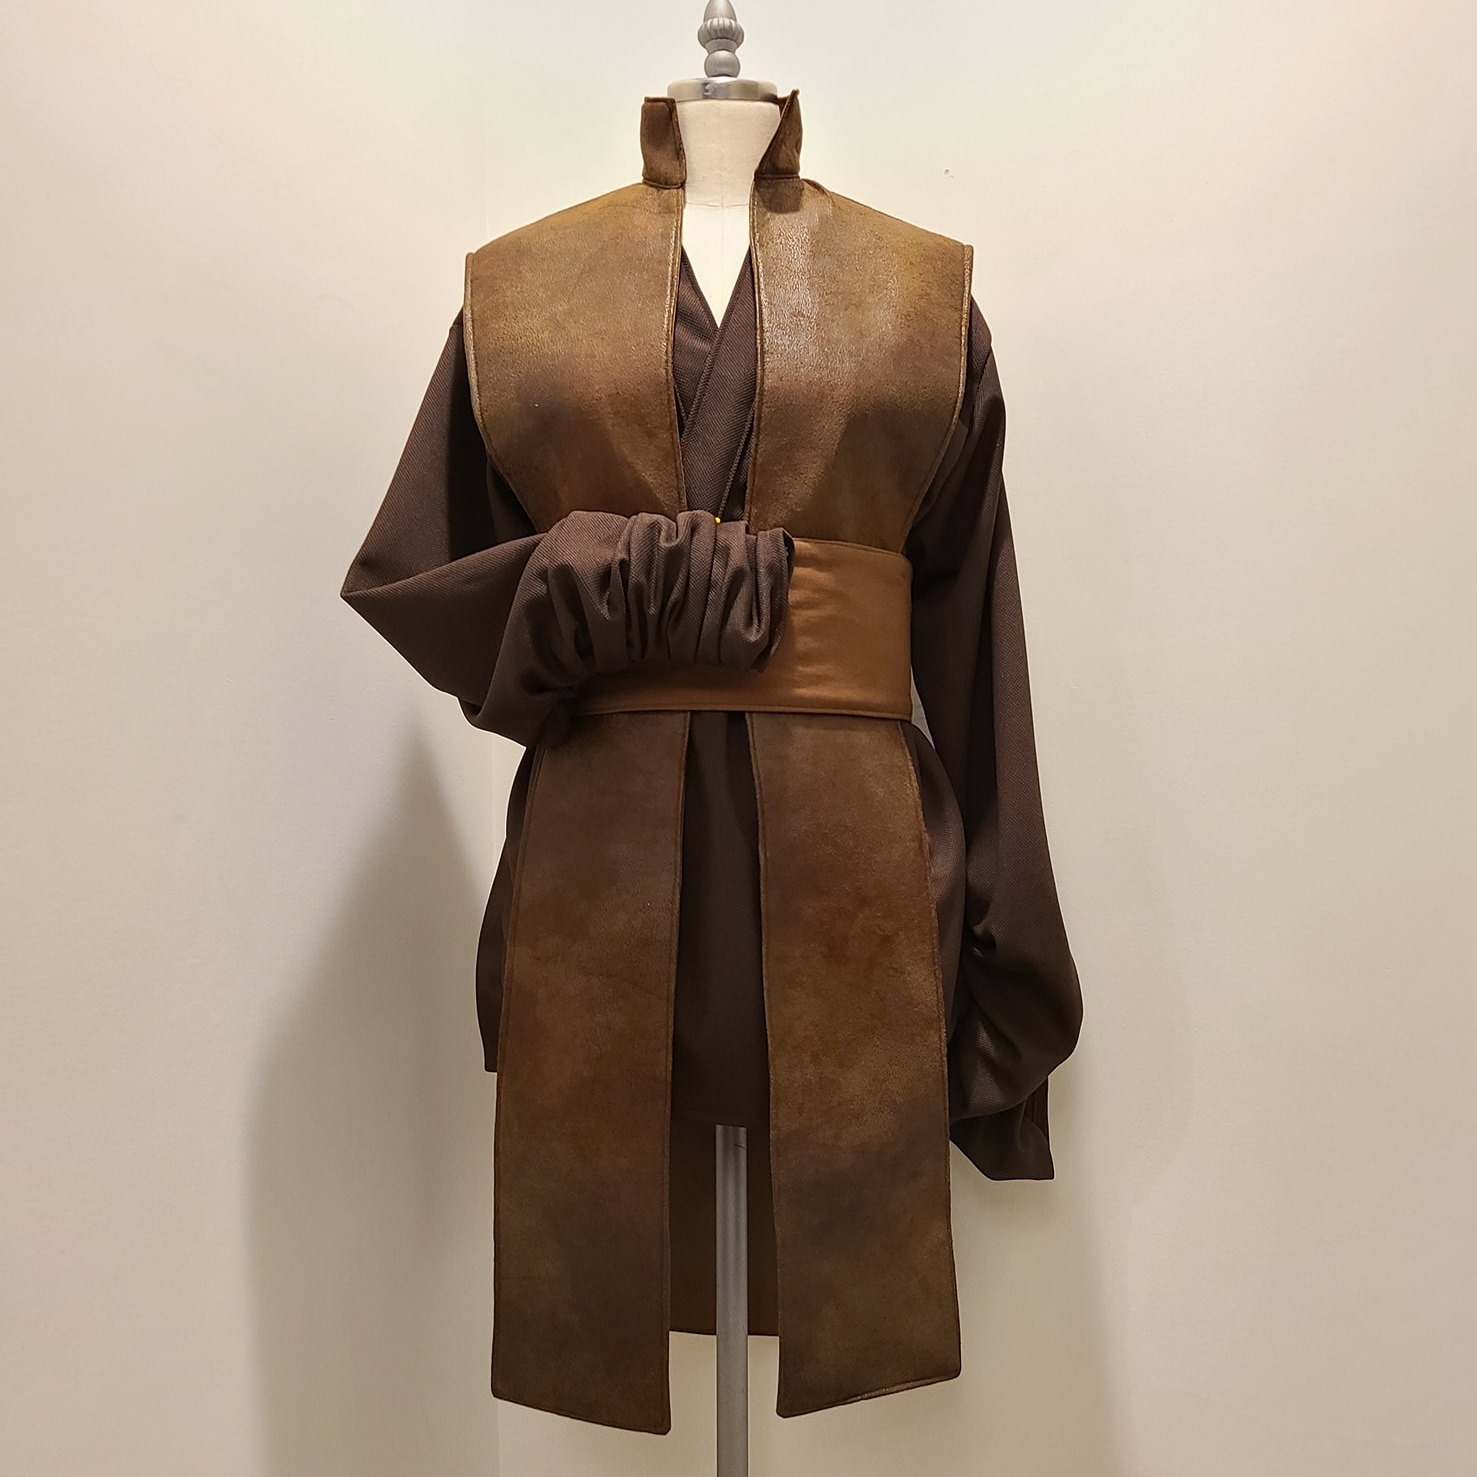 Brown custom ordered Jedi costume